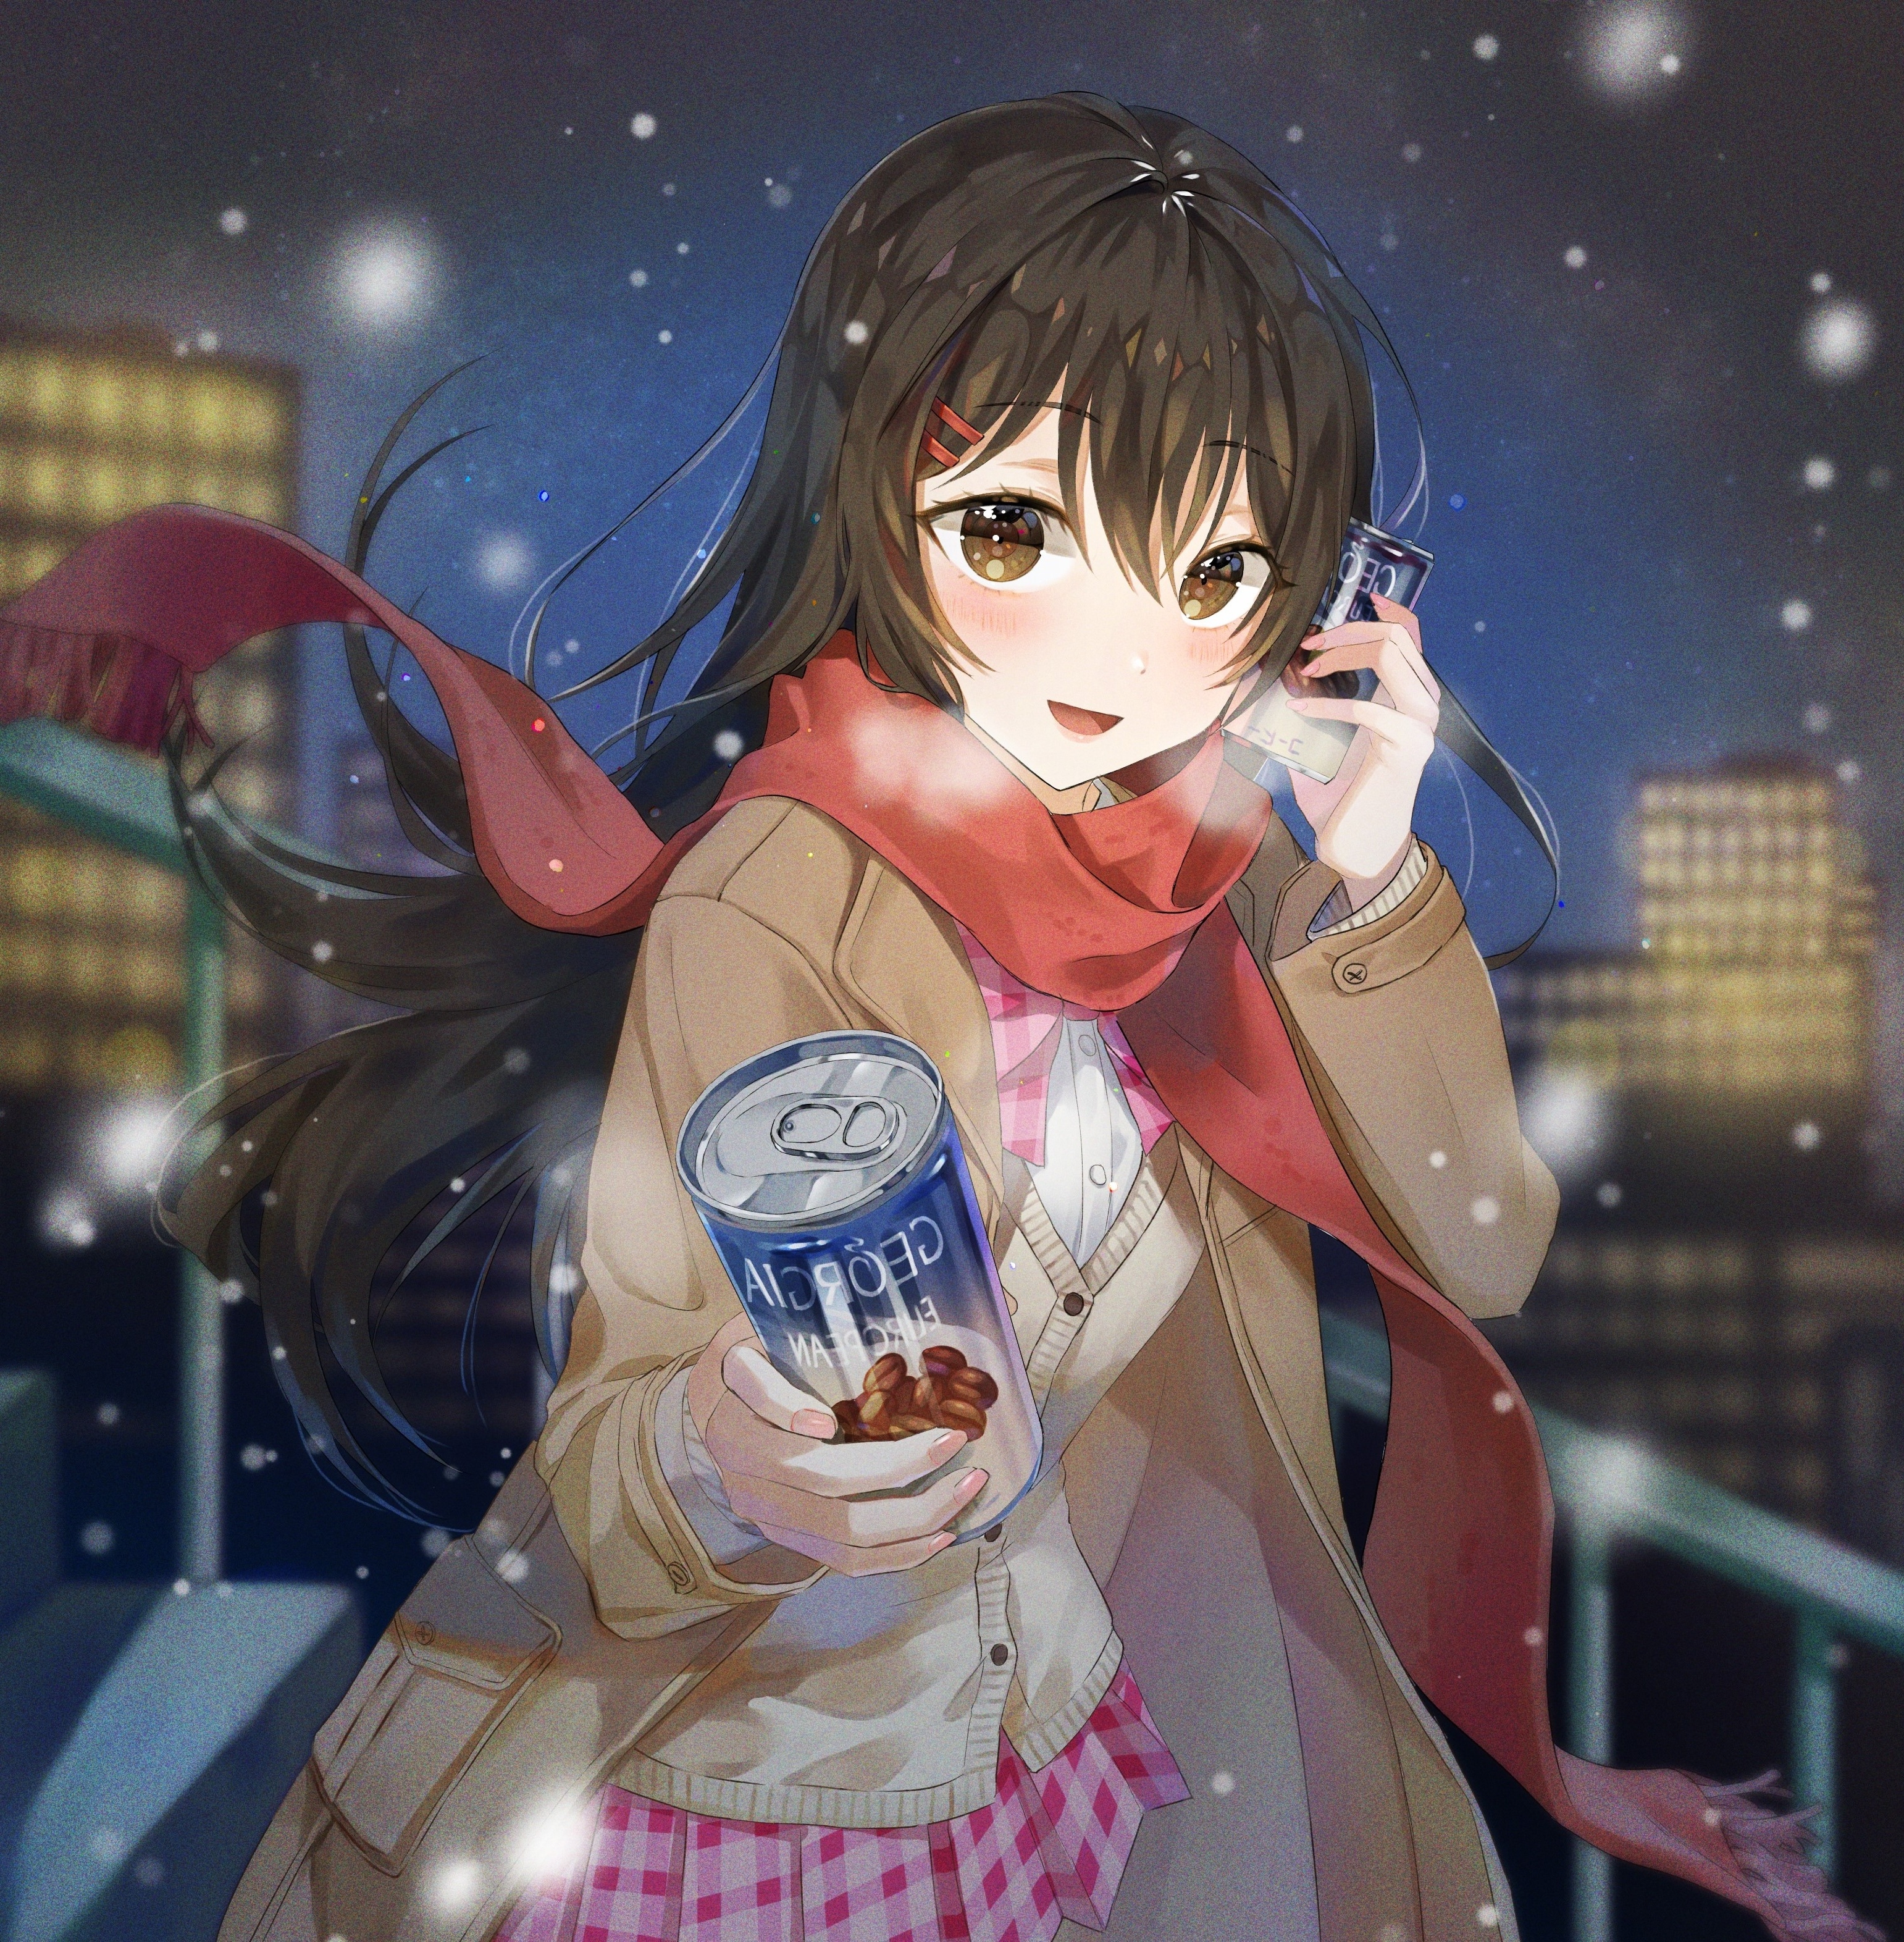 Wallpaper Winter, Red Scarf, Anime School Girl, Black Hair, Cold, Coffee:3083x3144